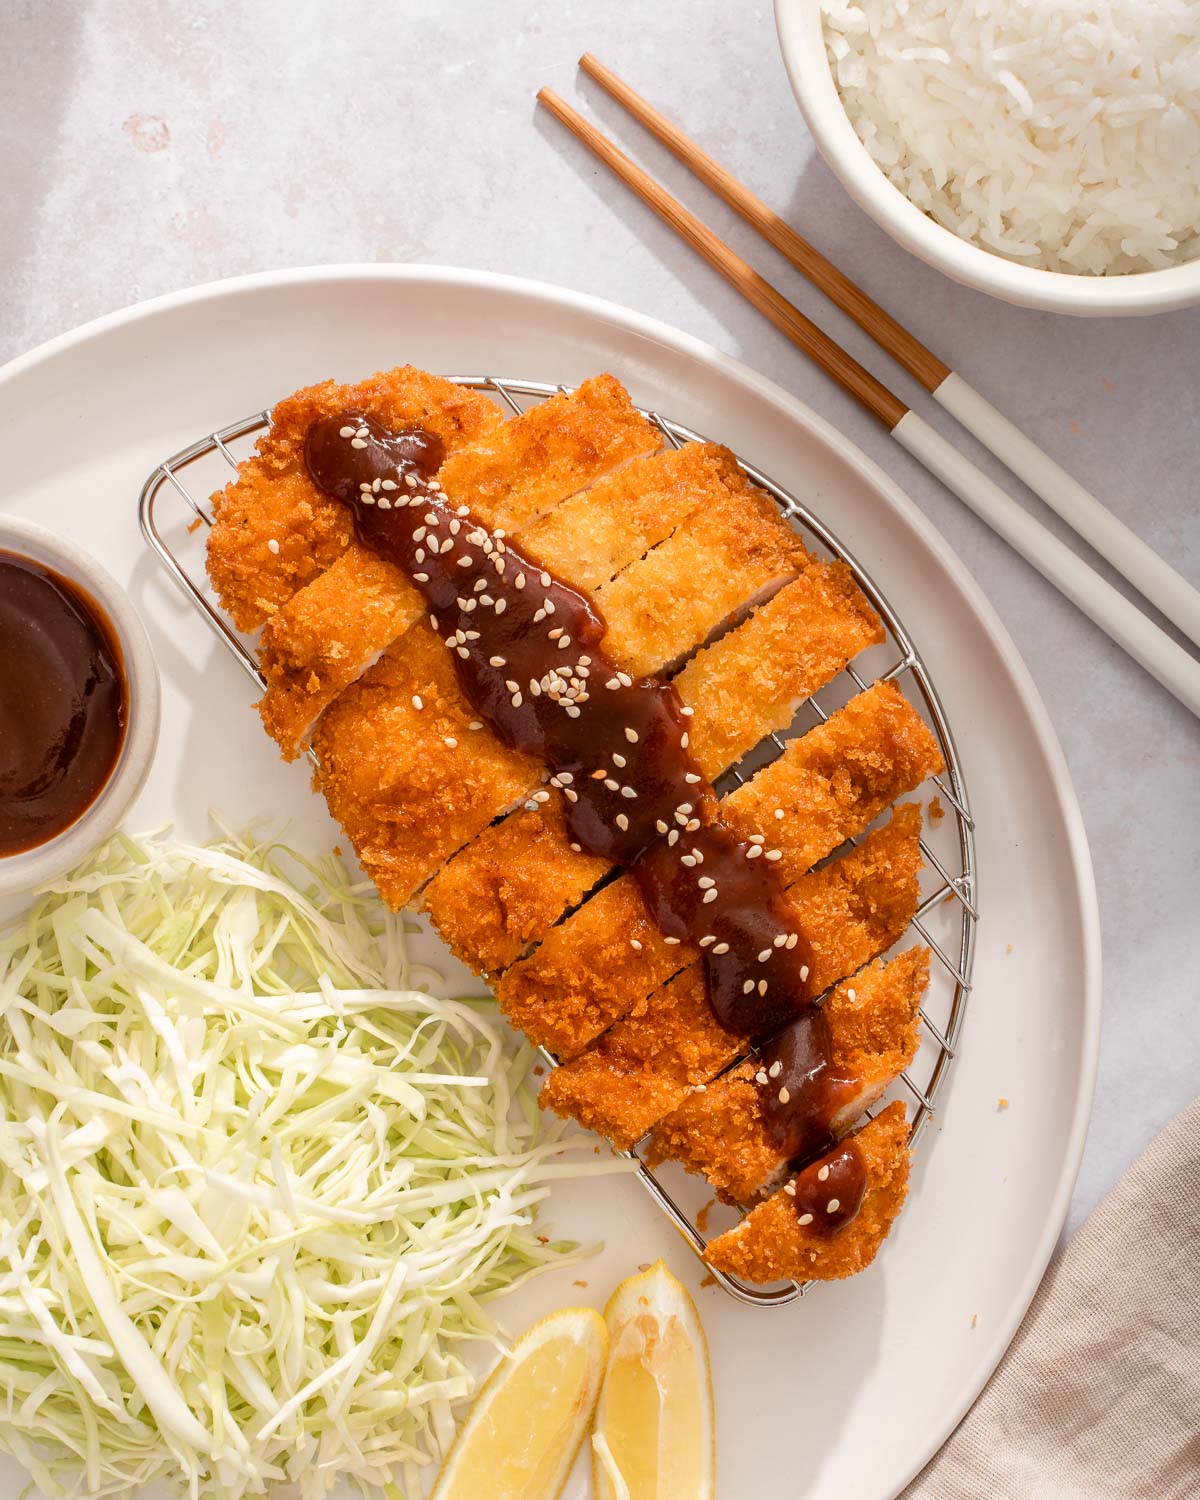 A chicken katsu topped with homemade katsu sauce and toasted sesame seeds.